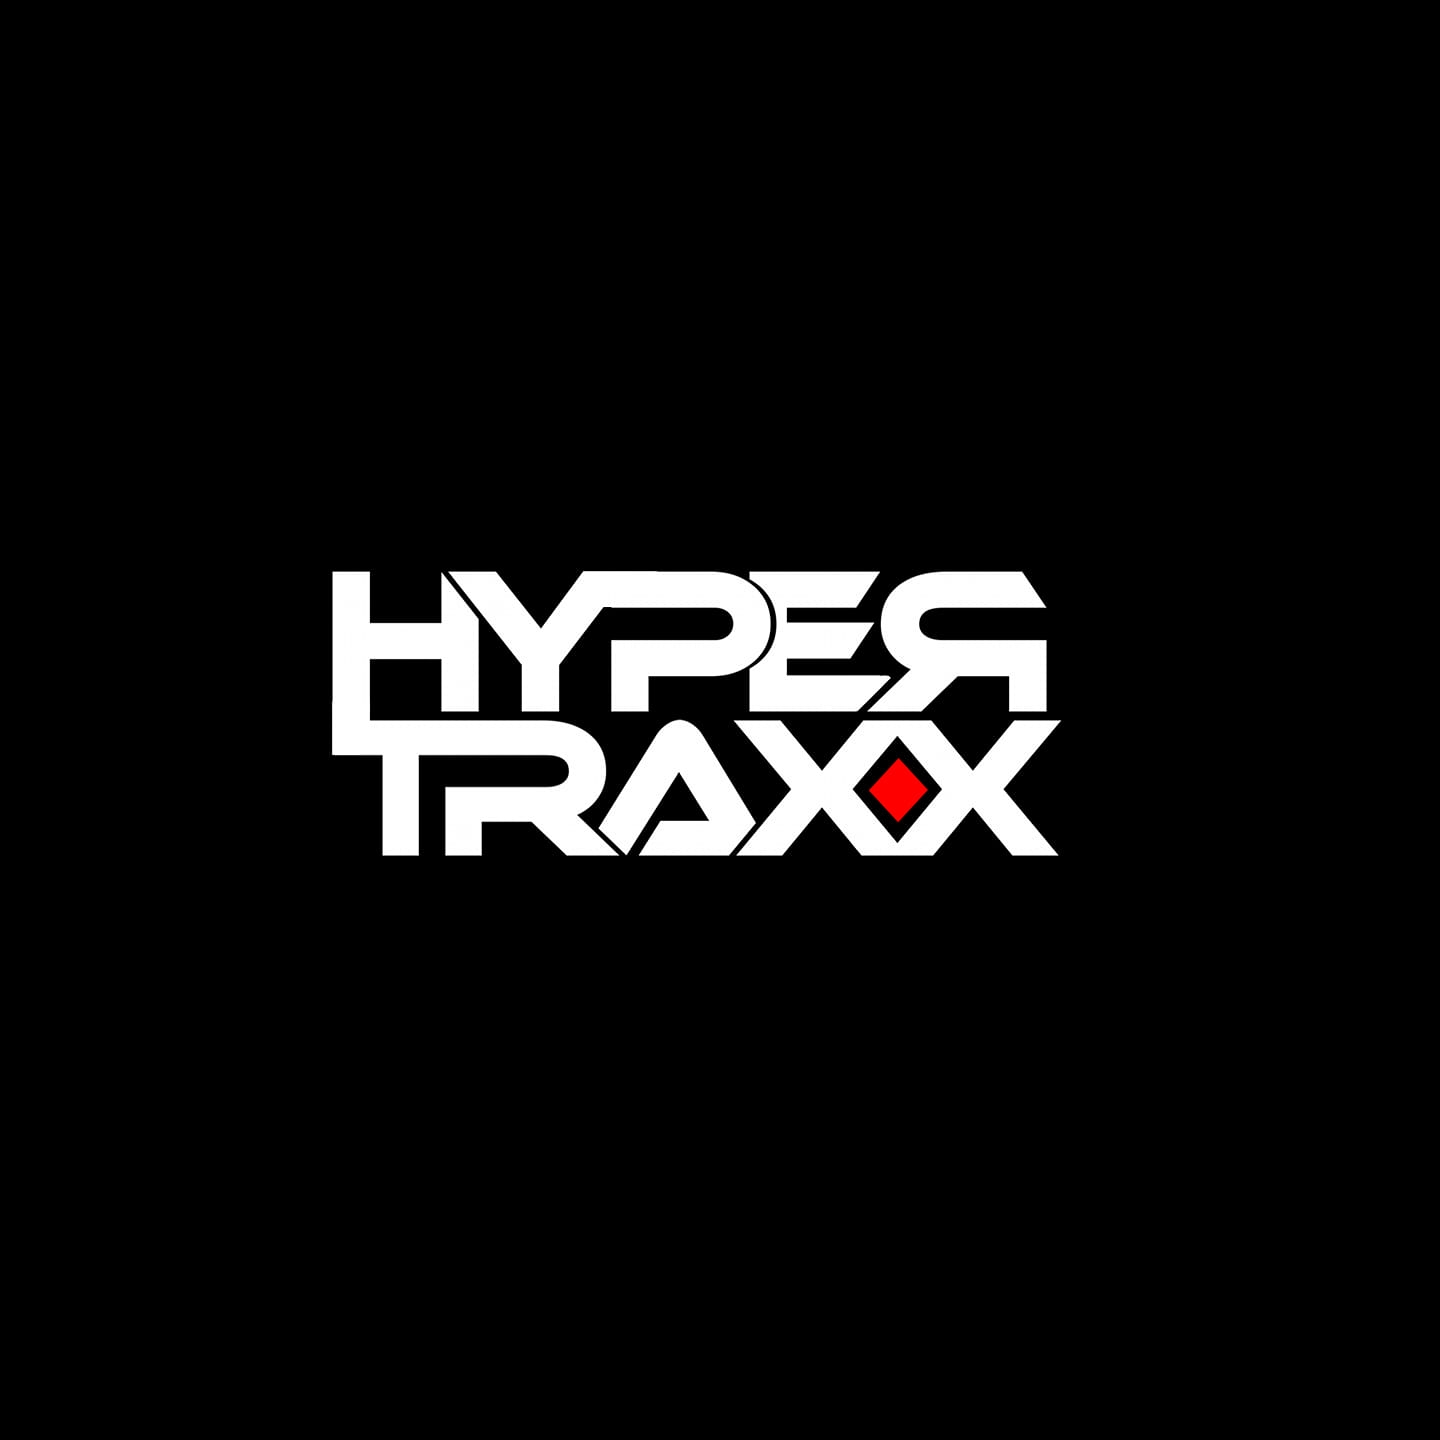 DJ Hypertraxx